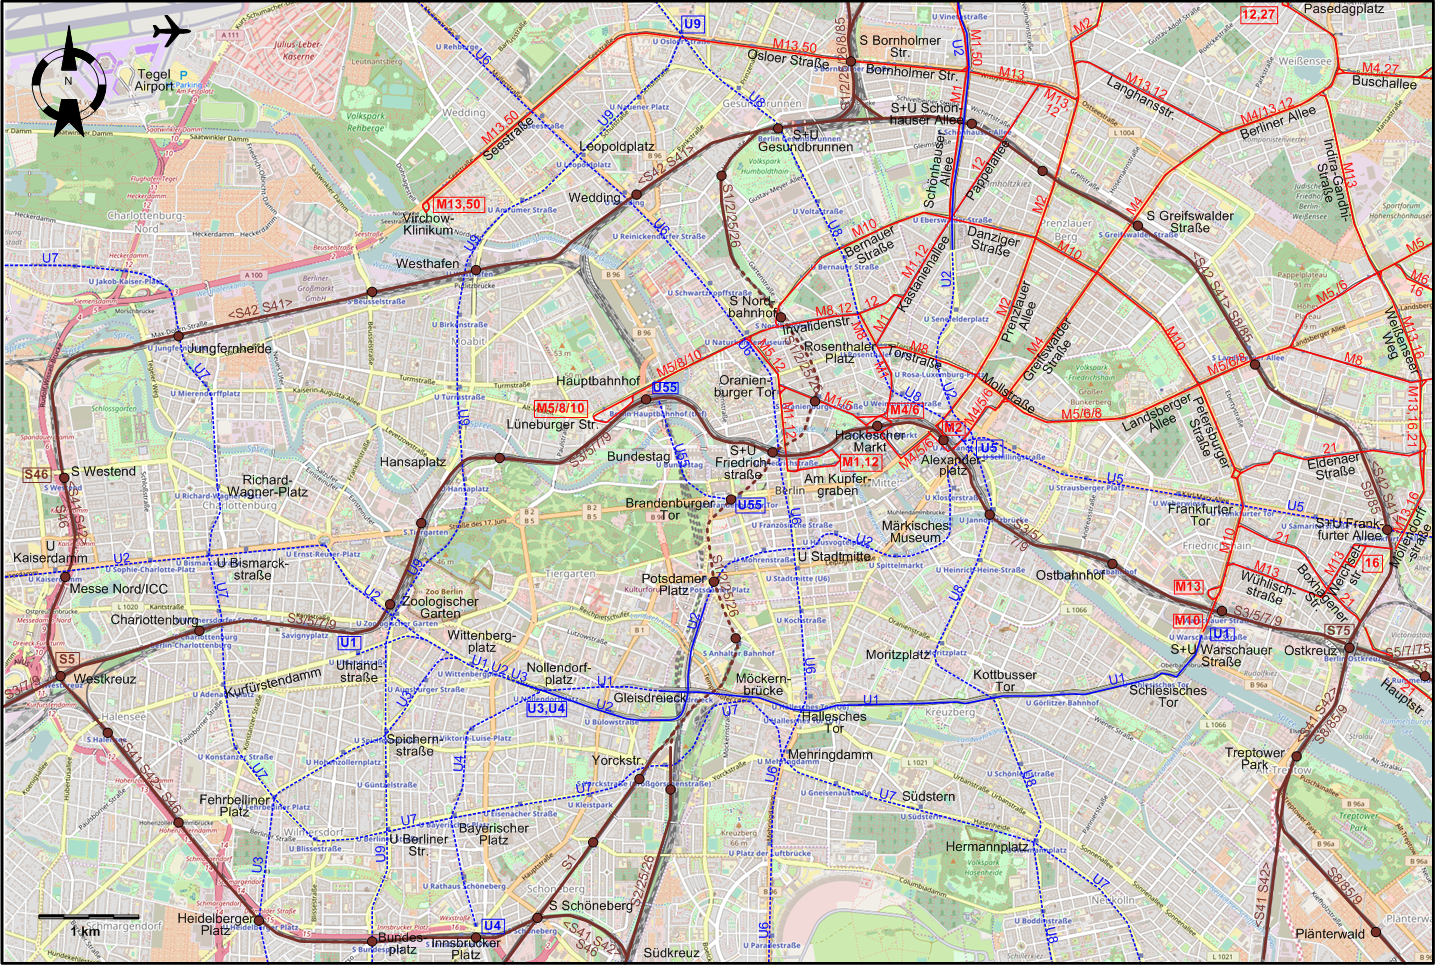 Berlin 2017 central tram map